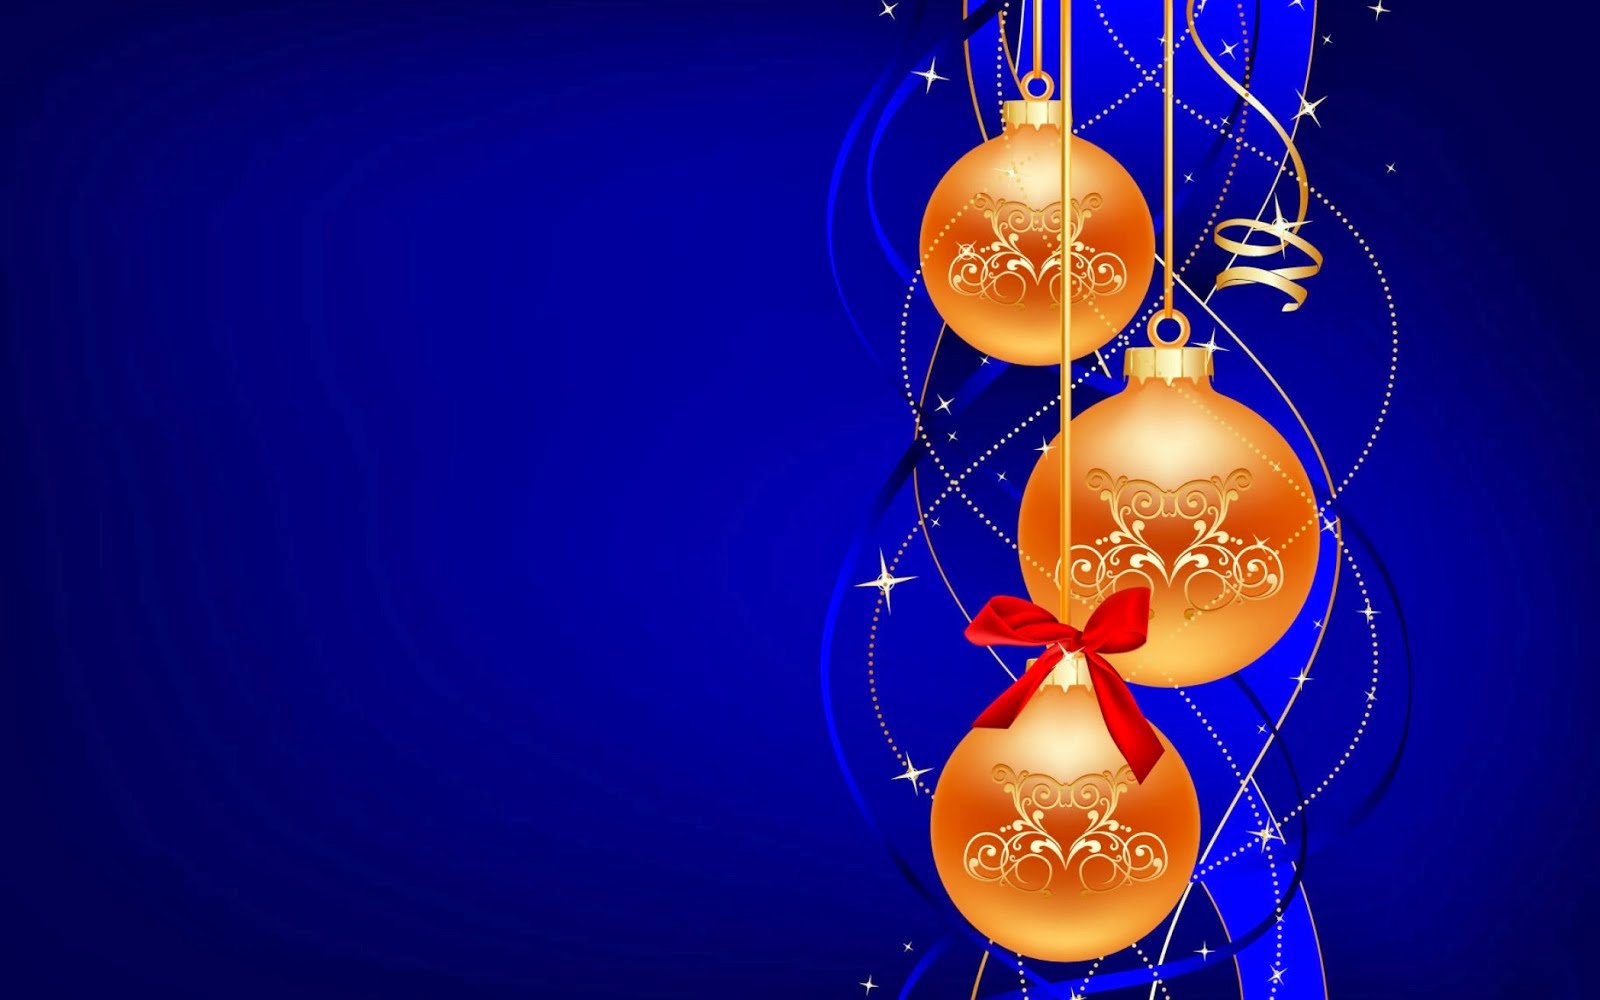 Animated Christmas Wallpaper For Windows 7 | Wallpaper ...